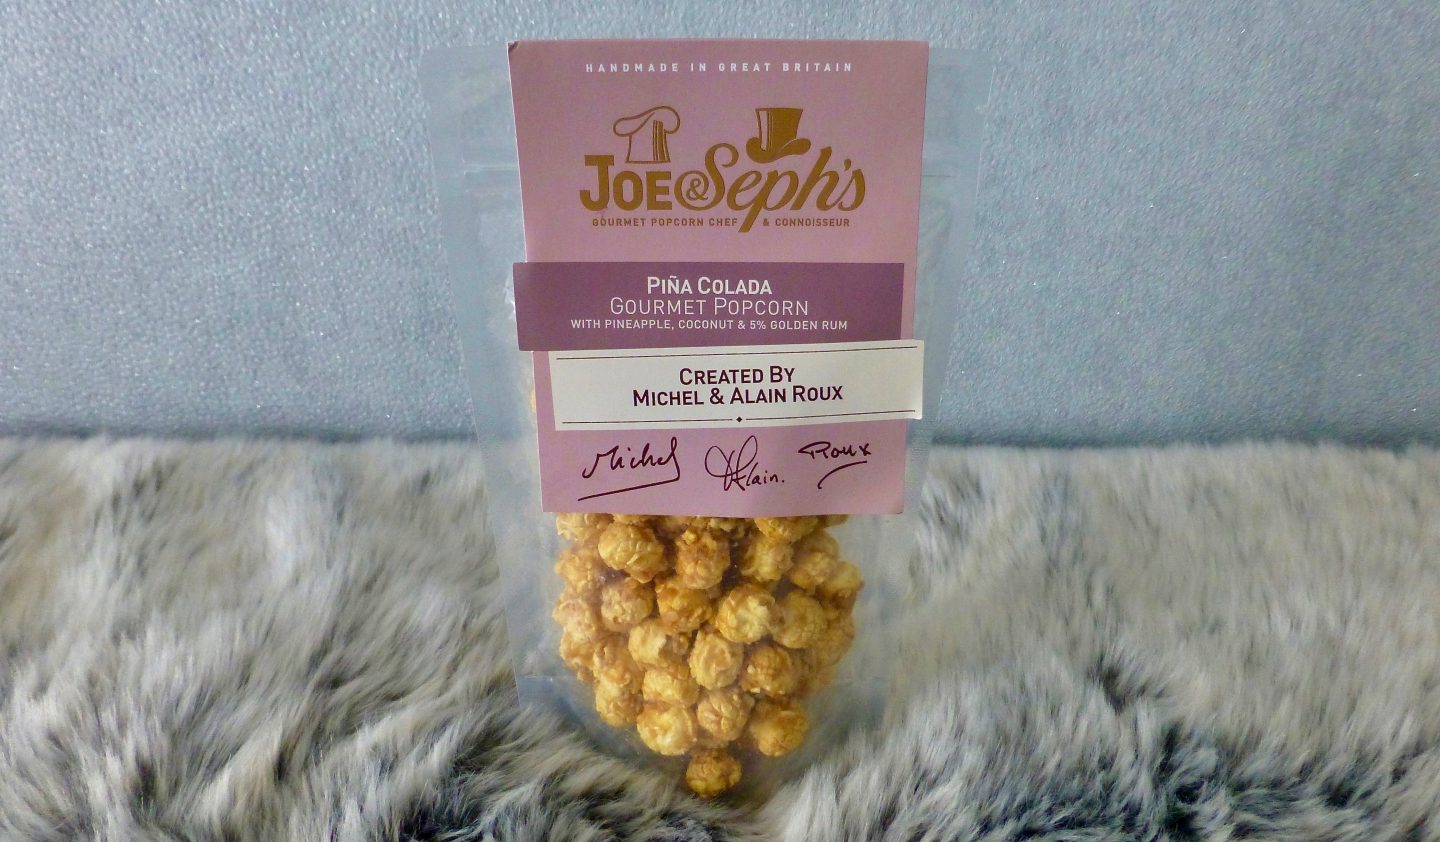 Joe & Seph’s Pina Colada Popcorn